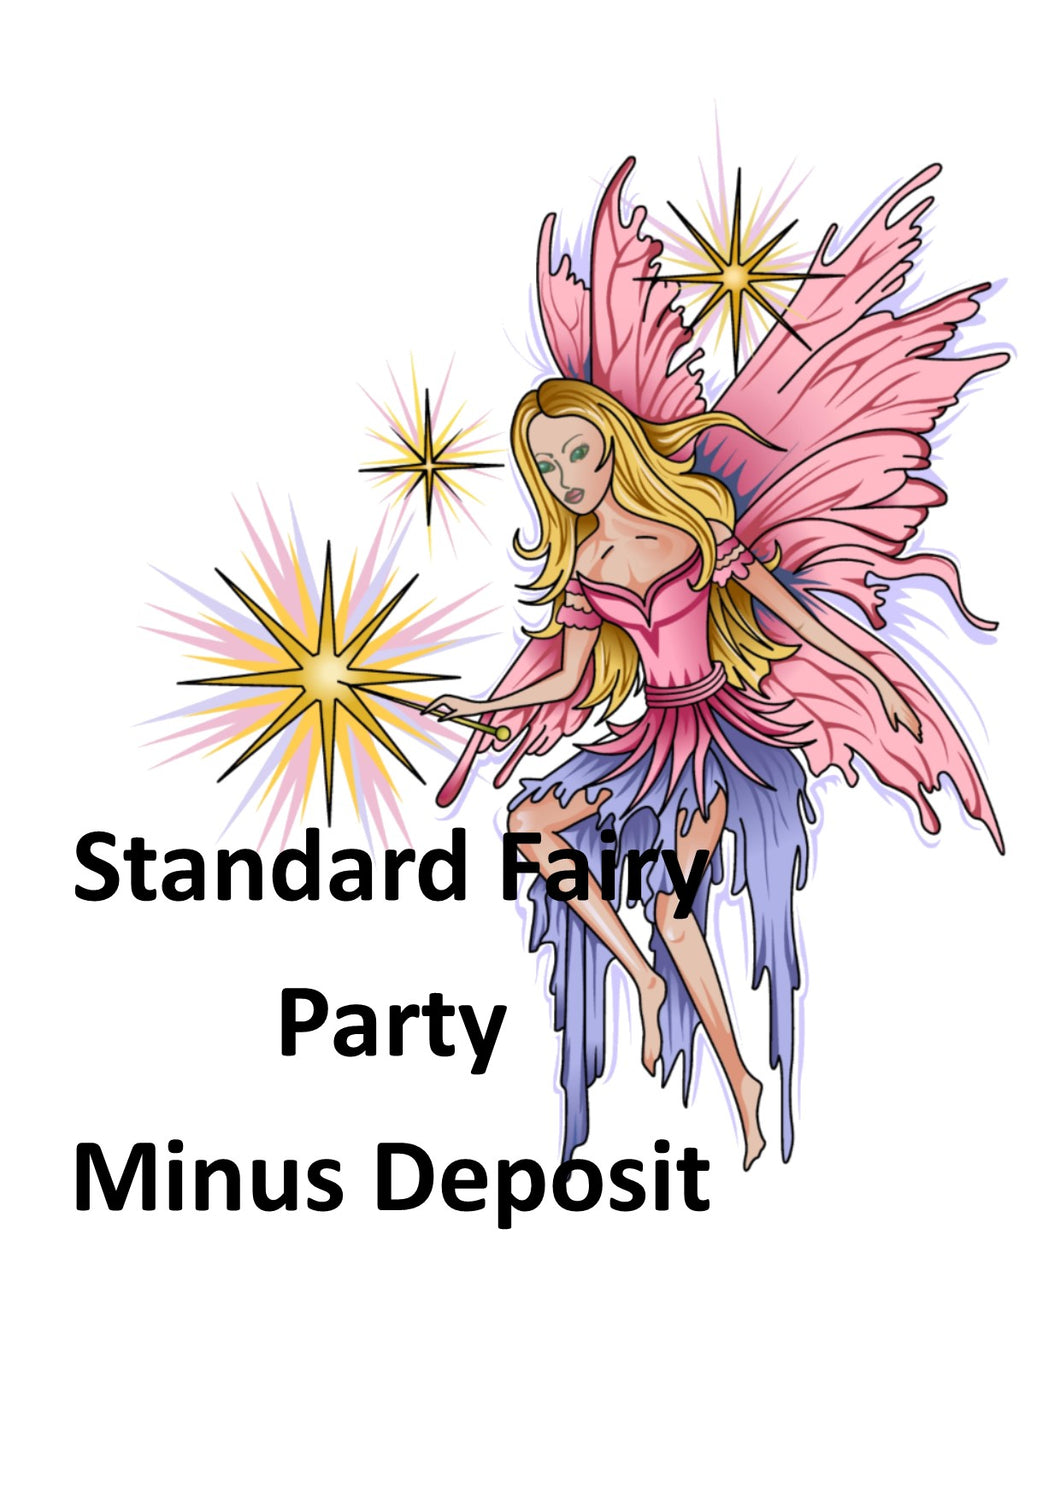 Fairy Party Minus Deposit